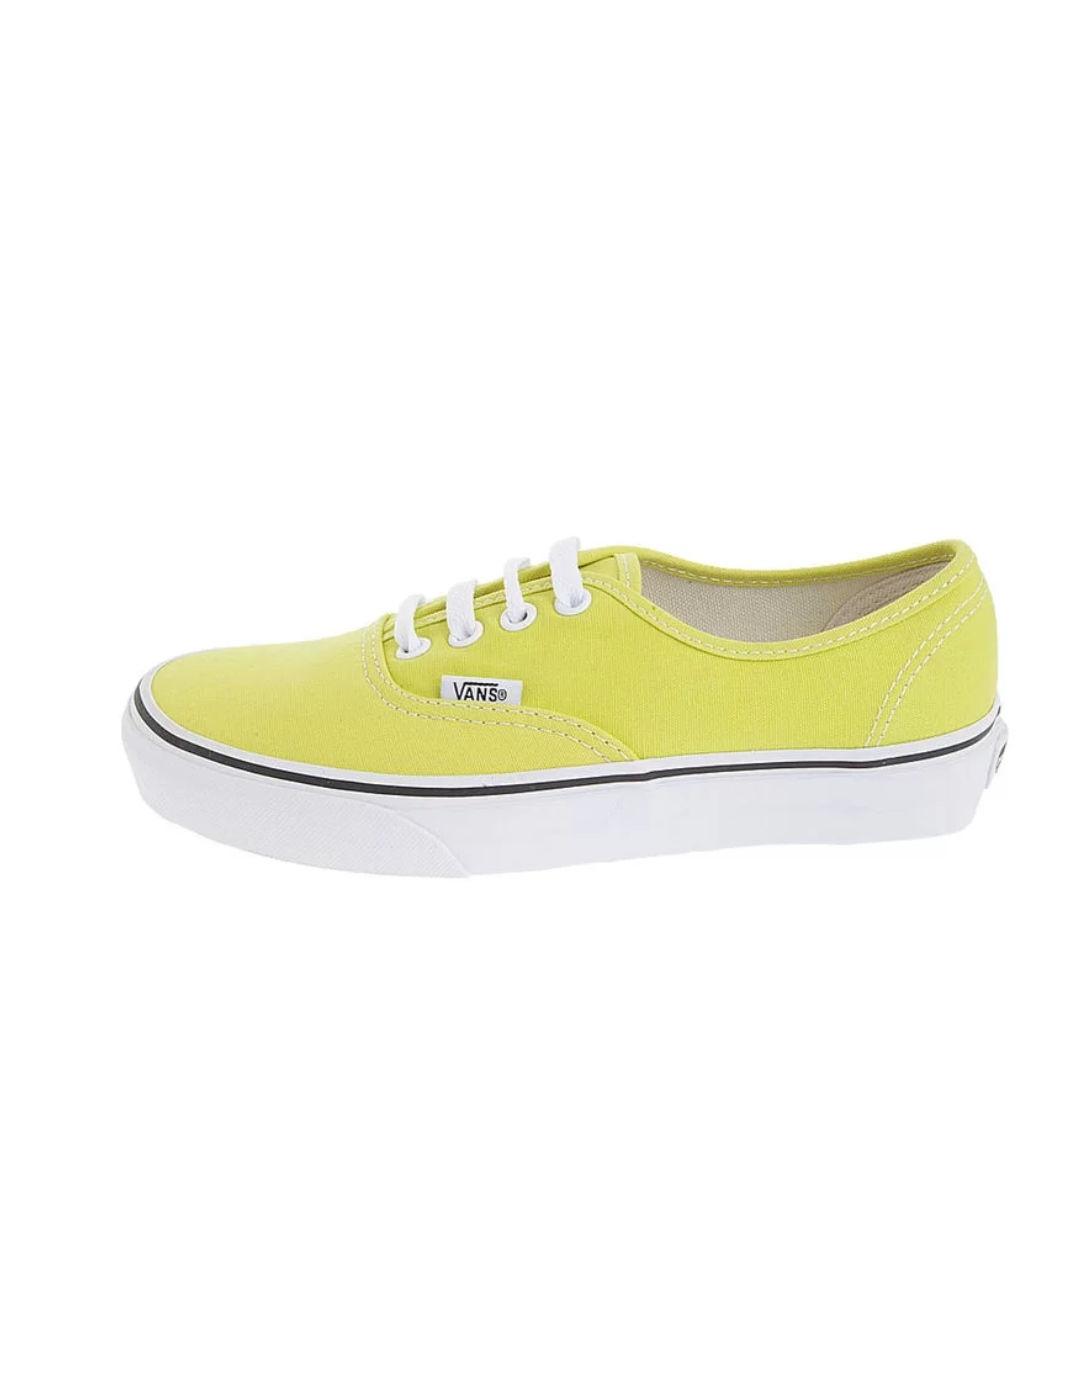 Zapatillas Vans Authentic amarillo limón unisex